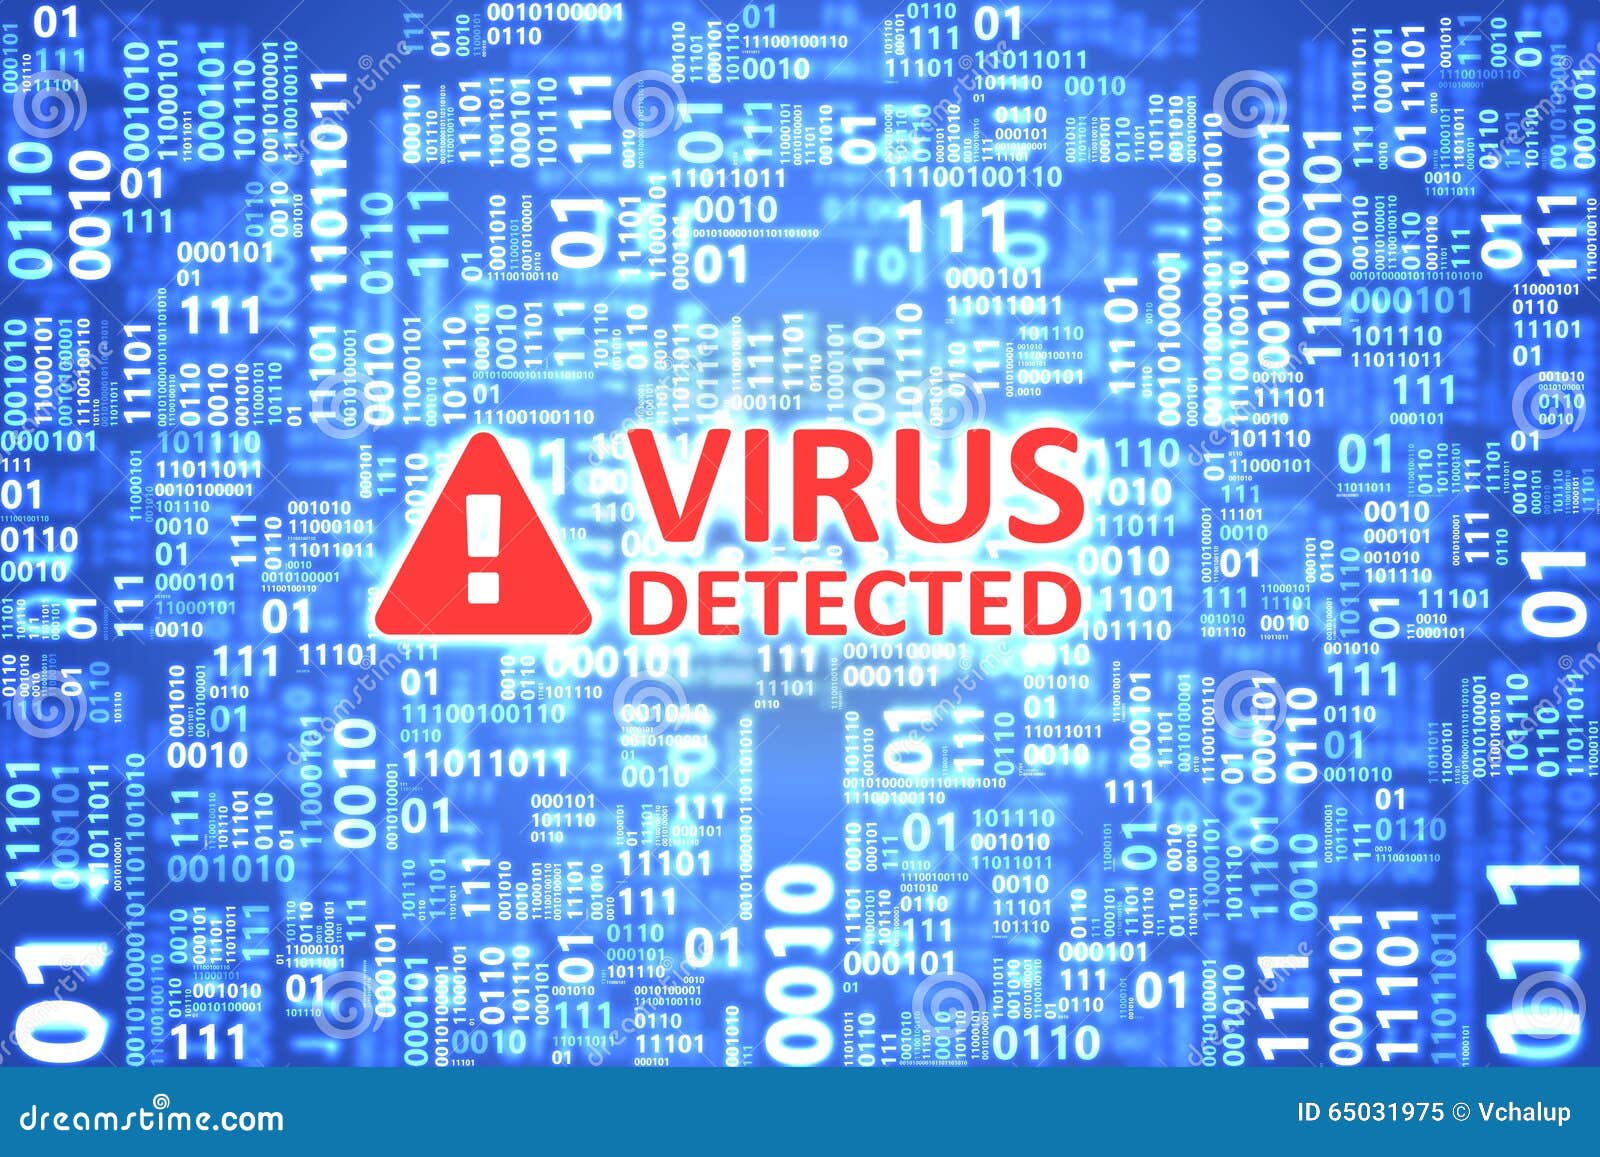 virus detected alert on computer screen.